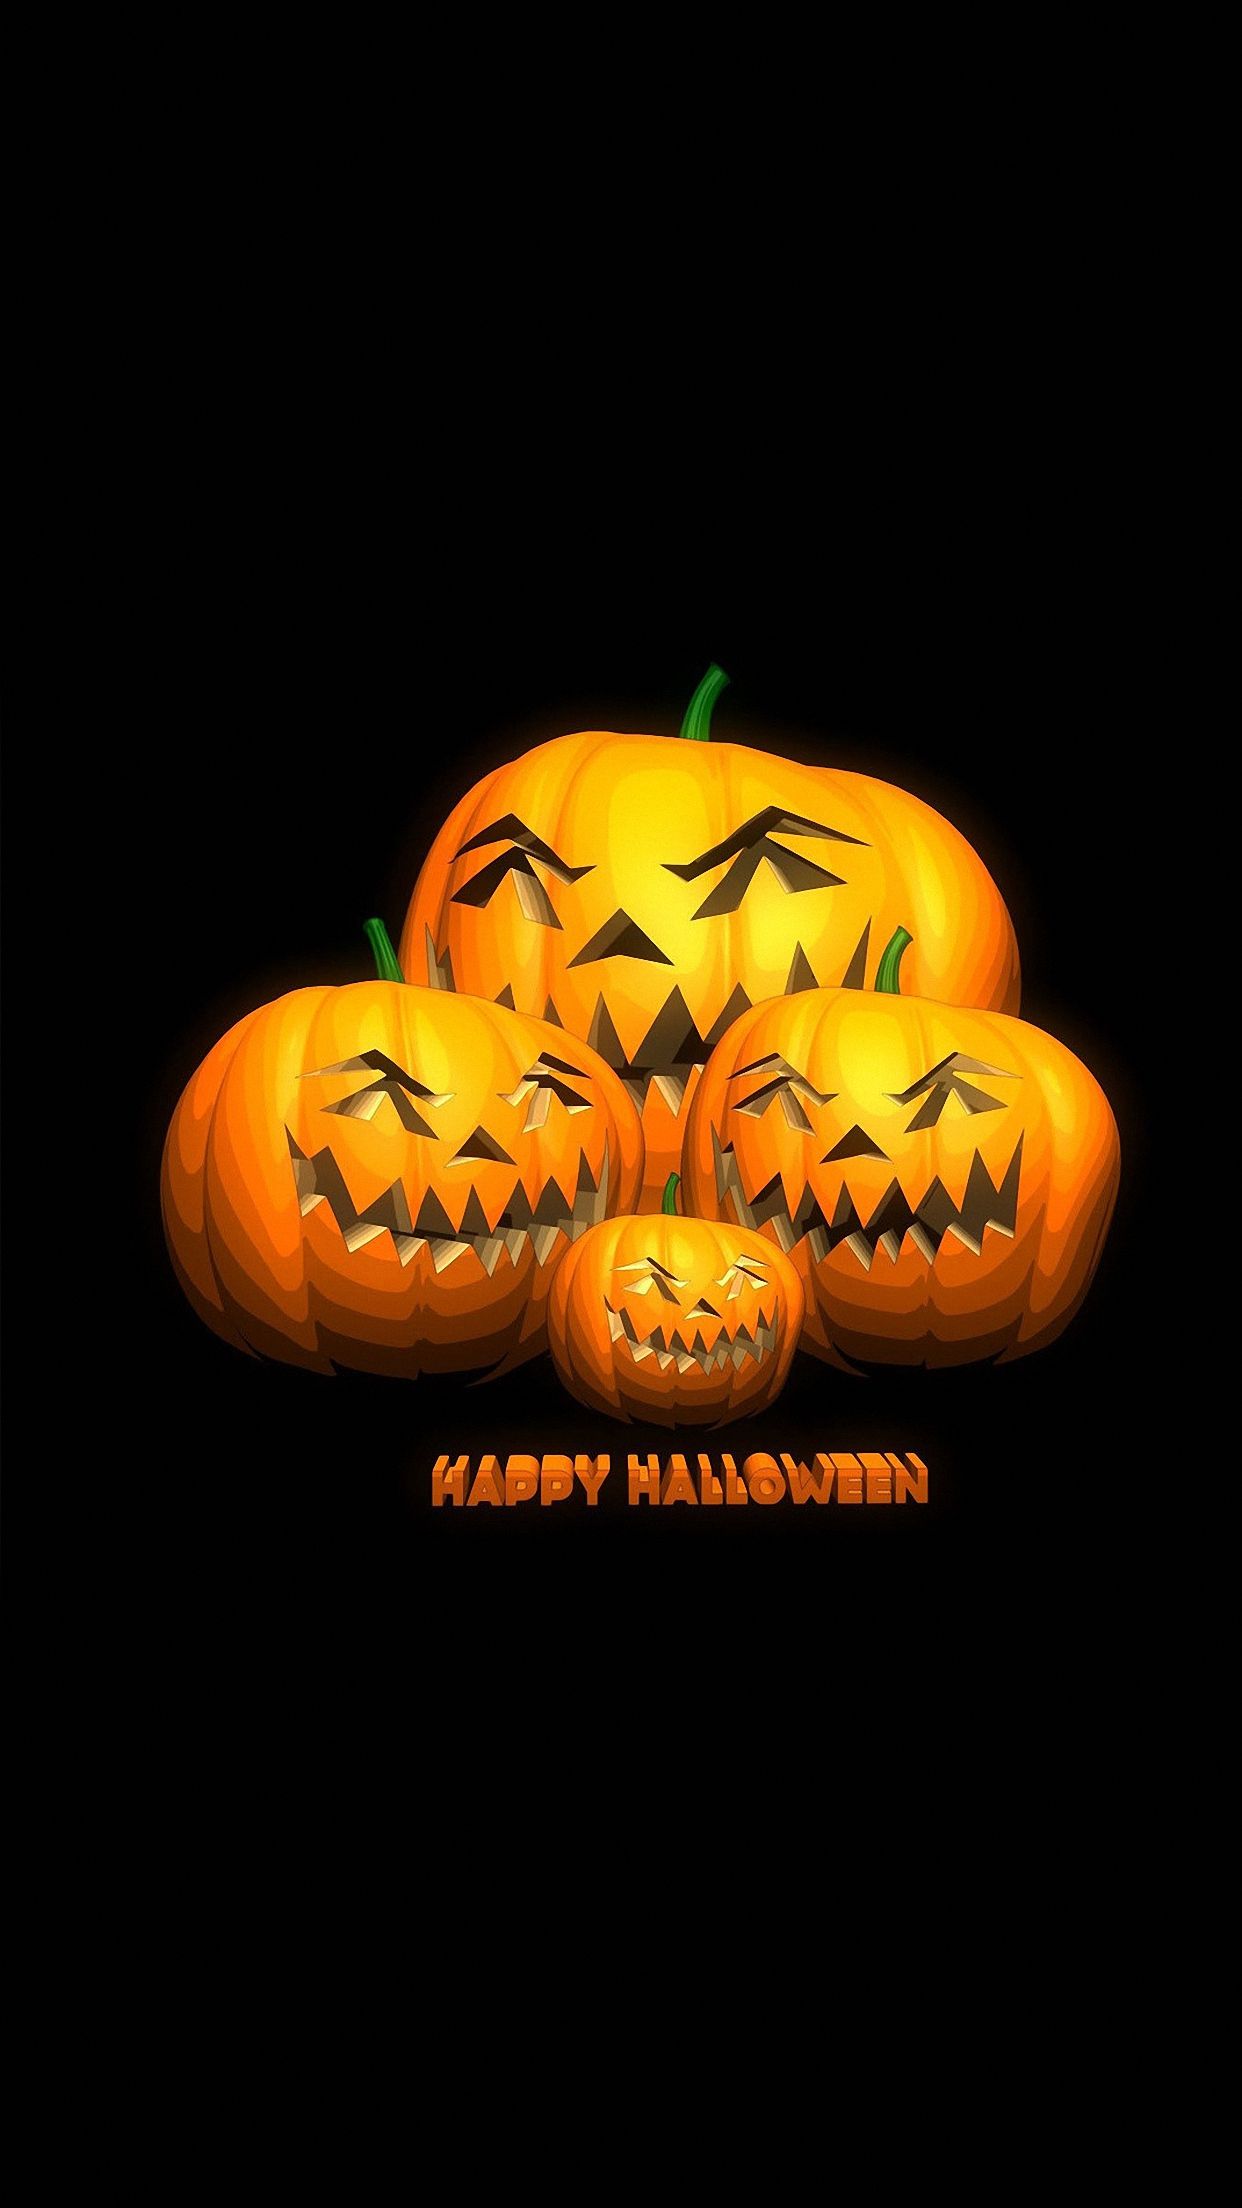 Halloween Pumpkin 2 Wallpaper for iPhone Pro Max, X, 6